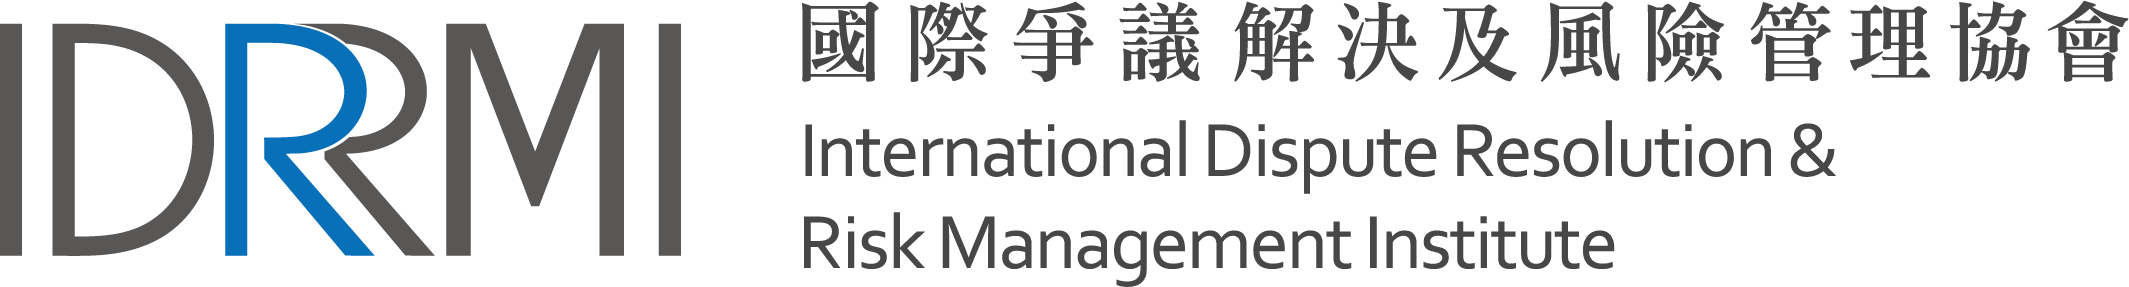 International Dispute Resolution & Risk Management Institute